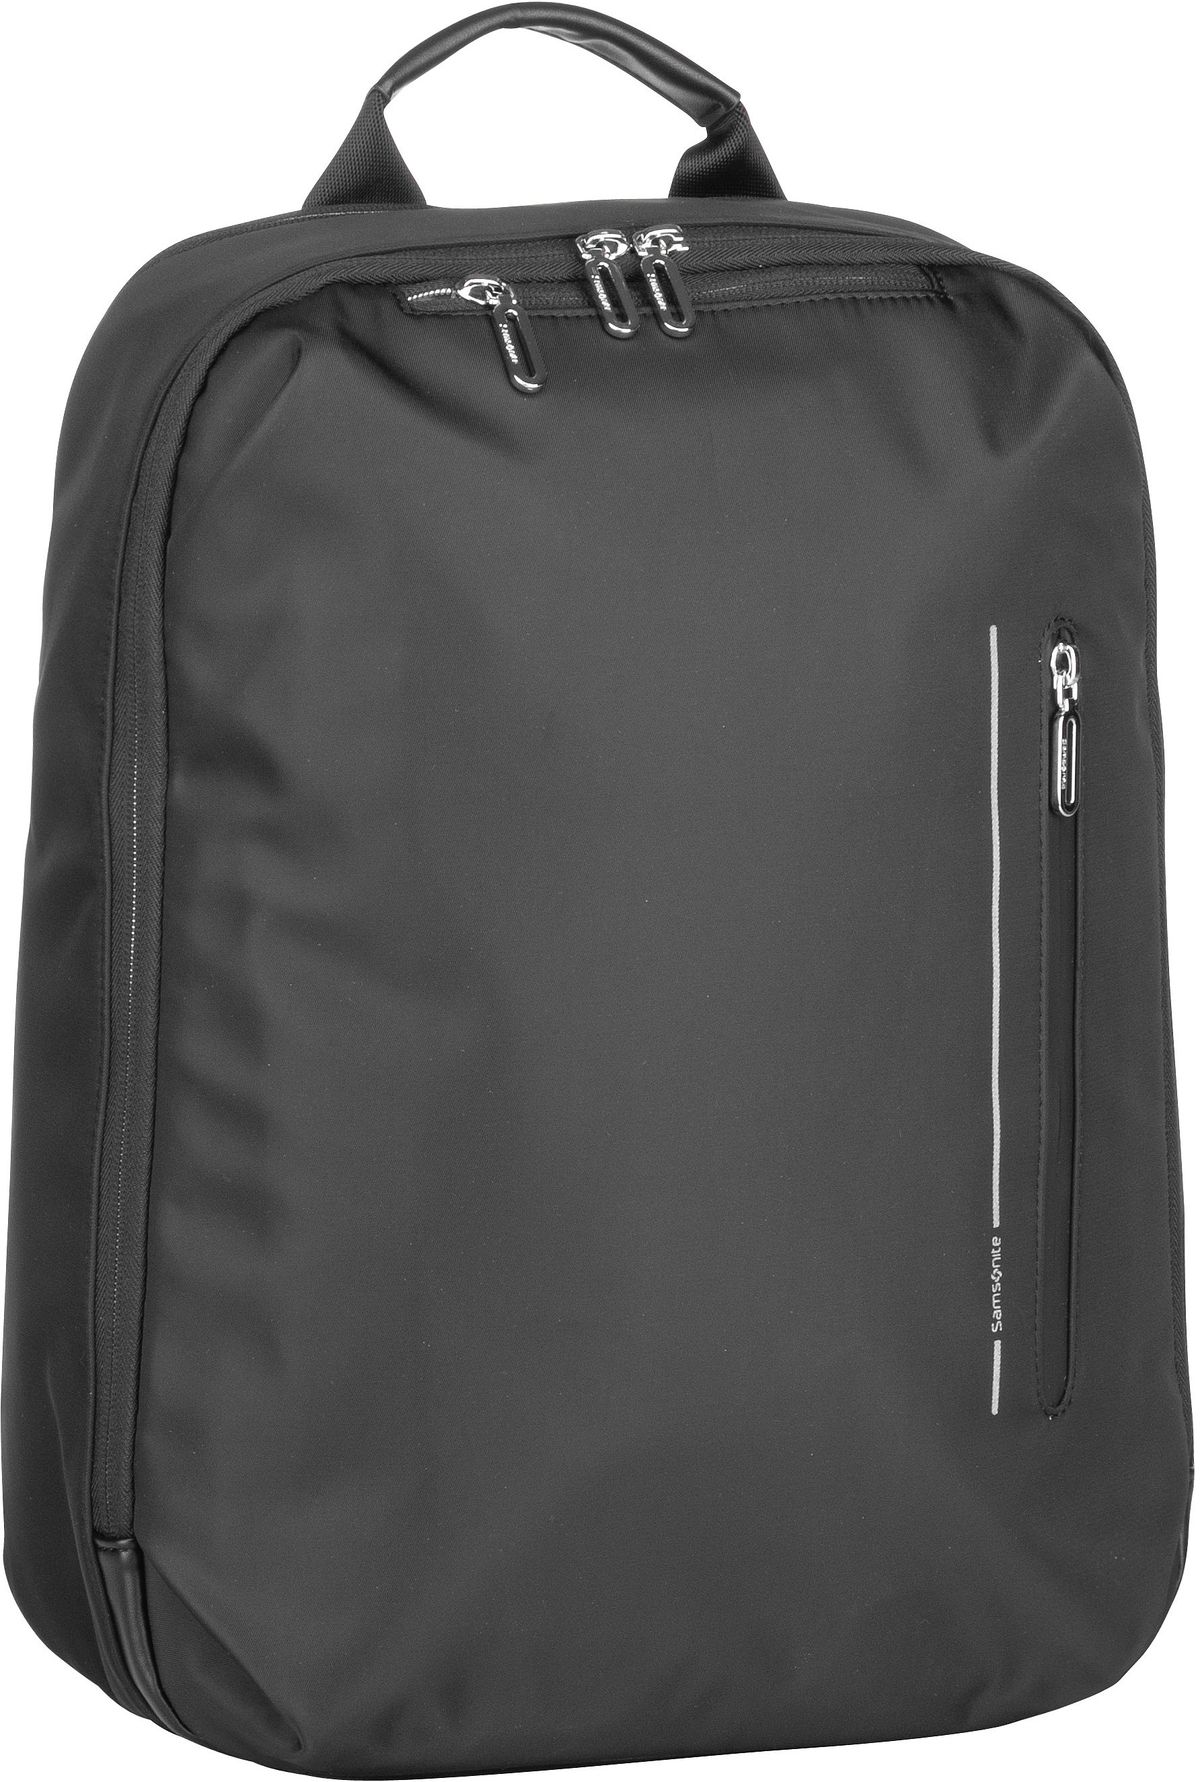 Samsonite Ongoing Backpack 15.6``  in Black (17 Liter), Rucksack / Backpack